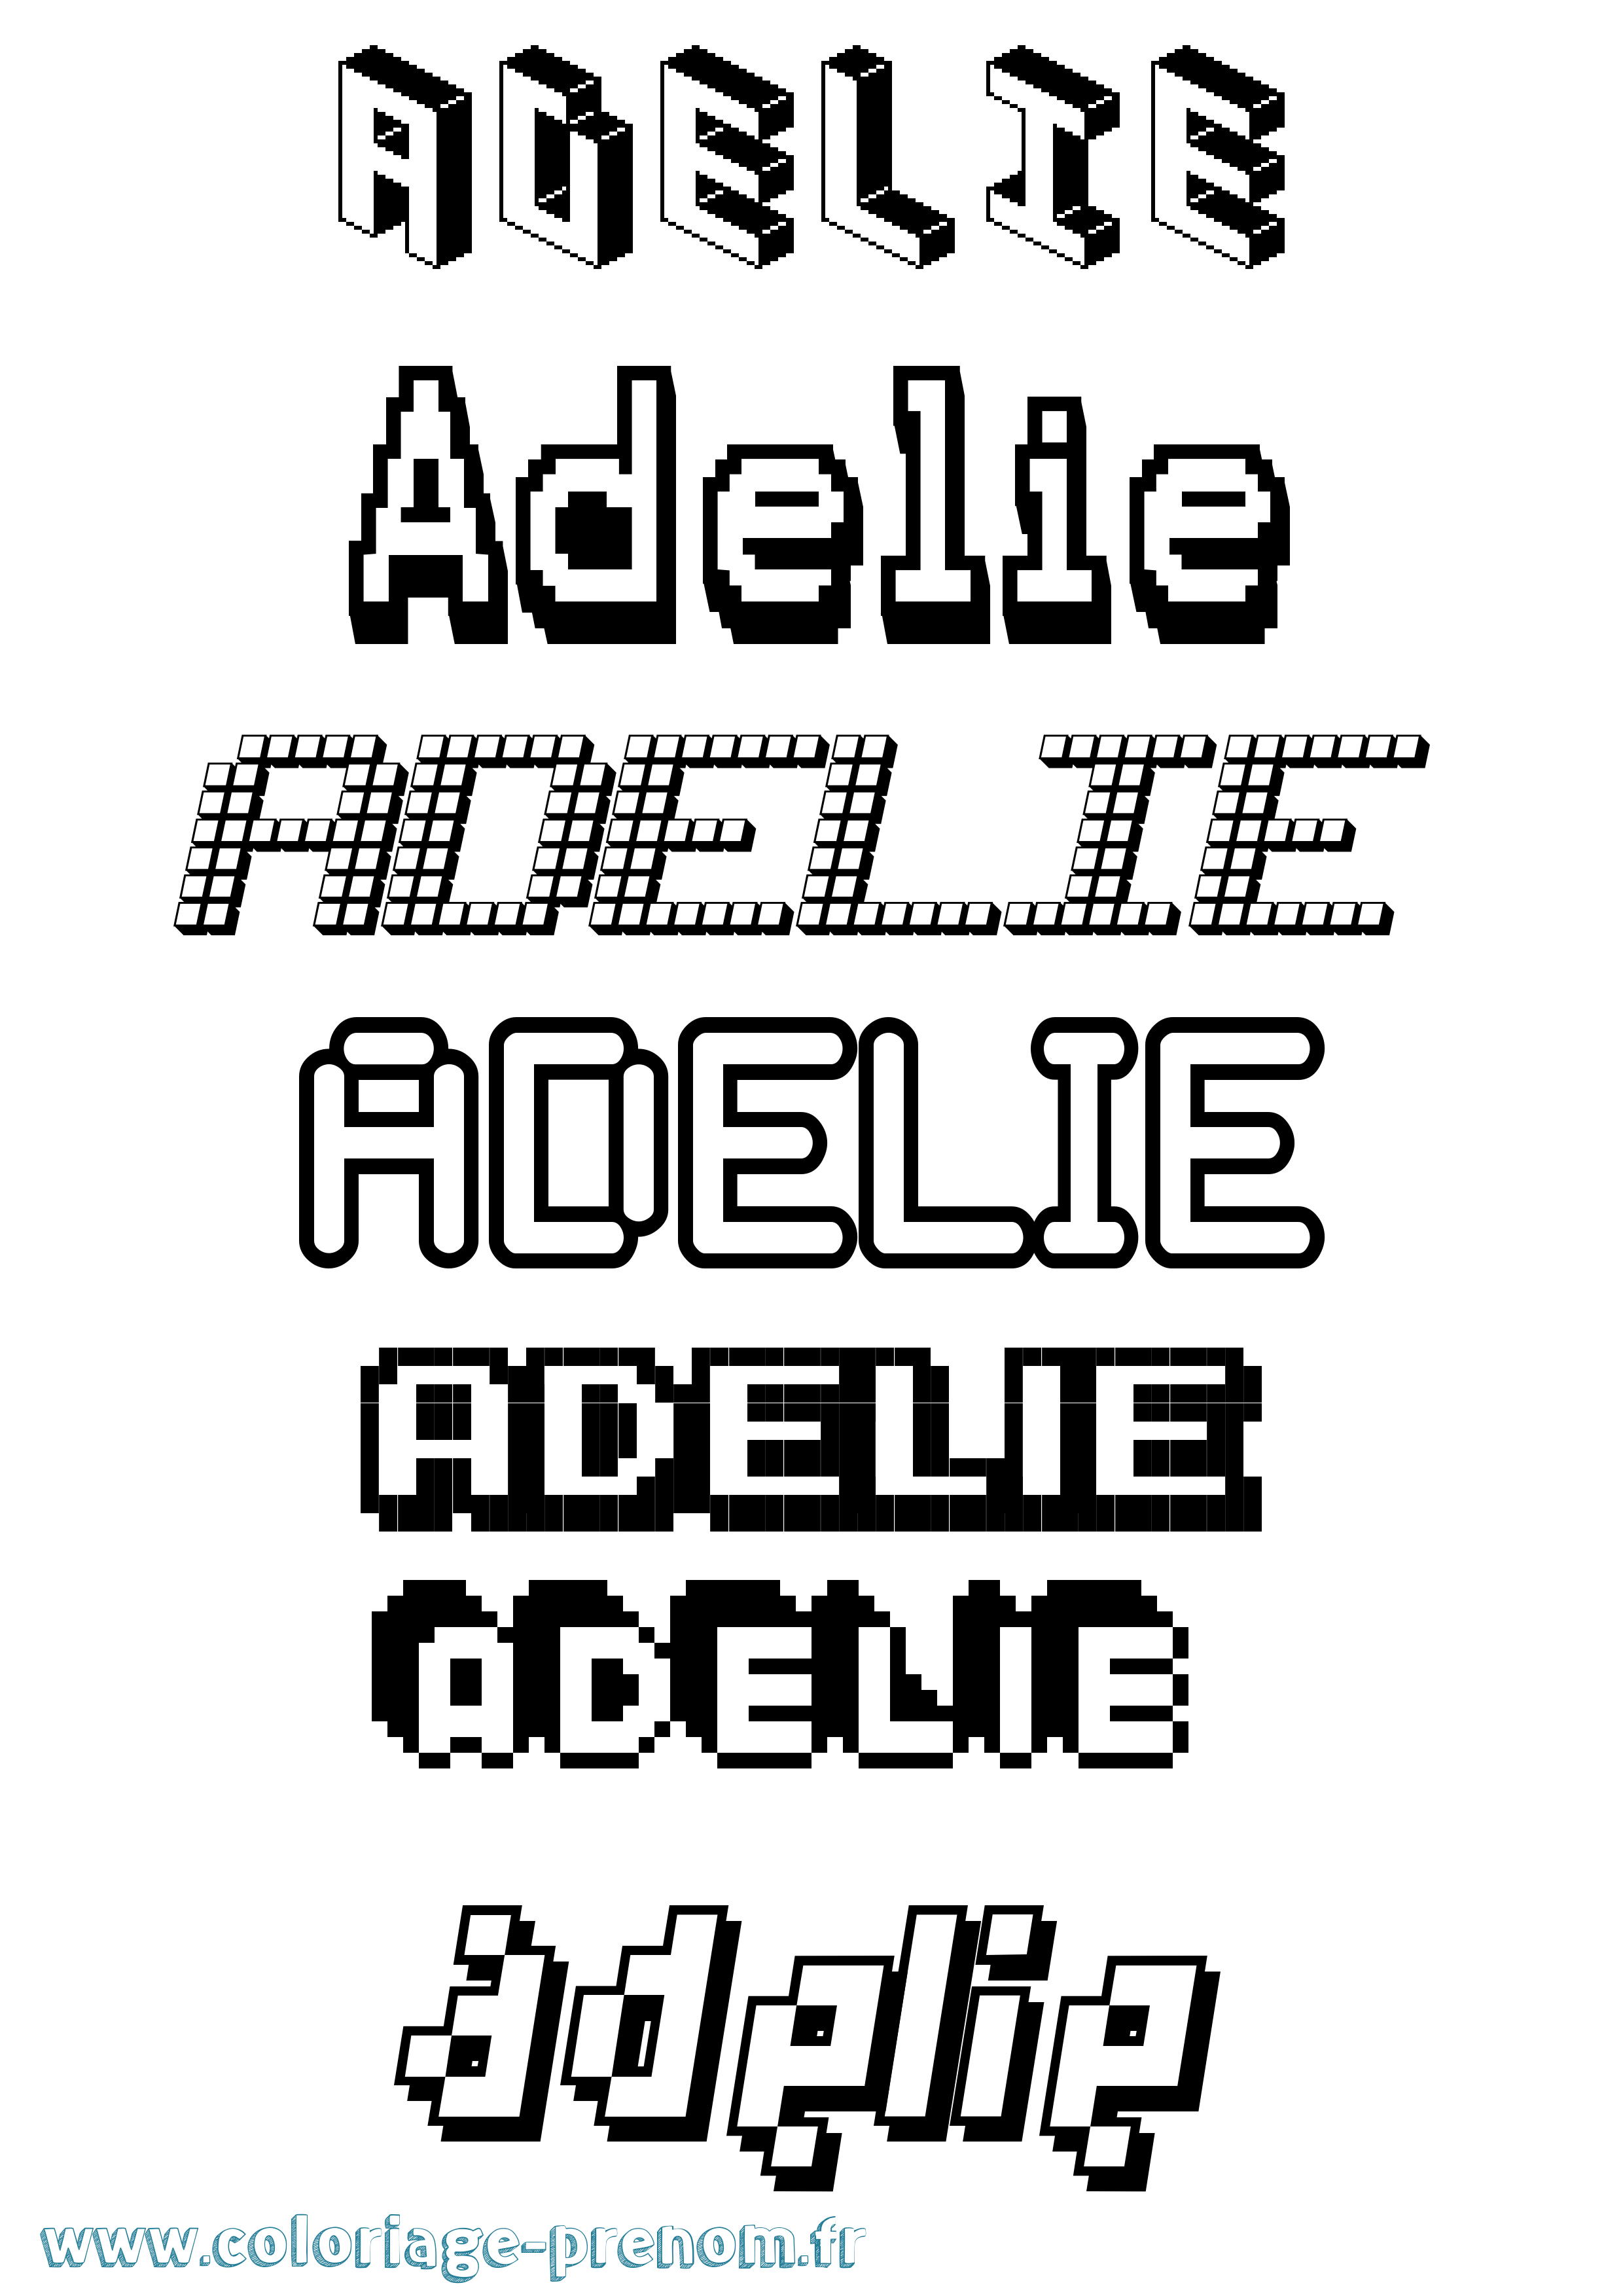 Coloriage prénom Adelie Pixel